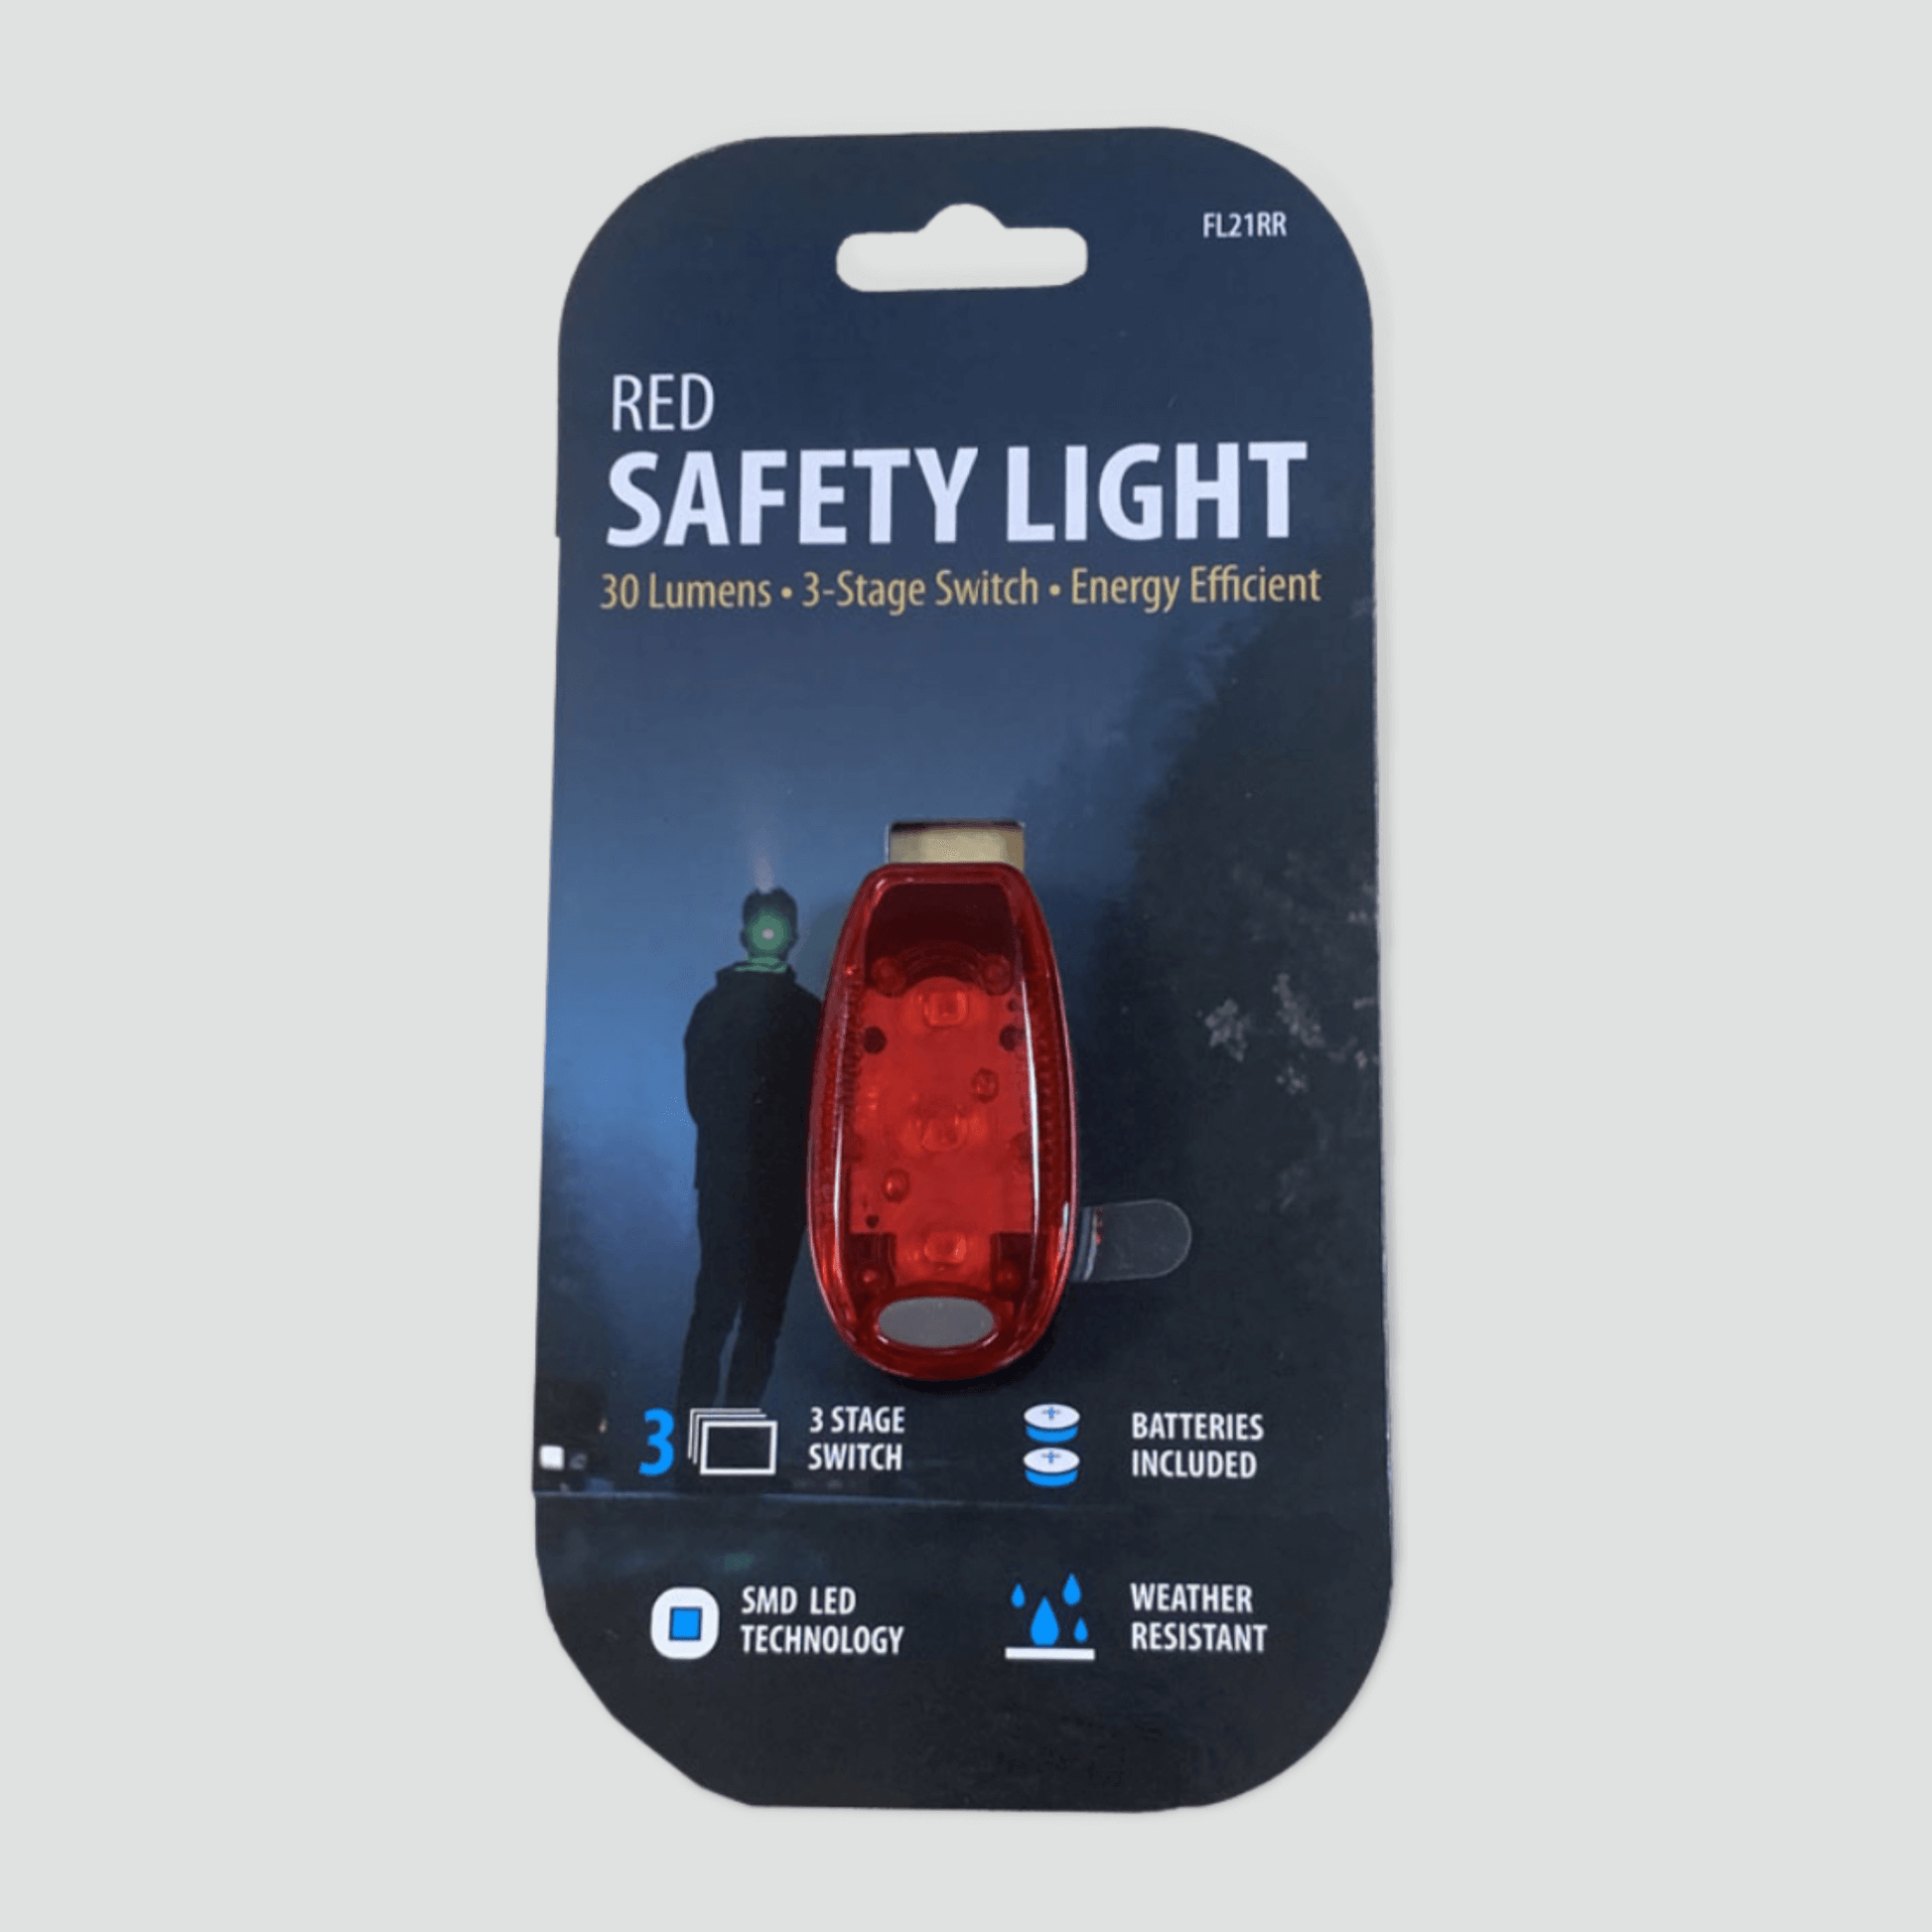 Red LED safety light